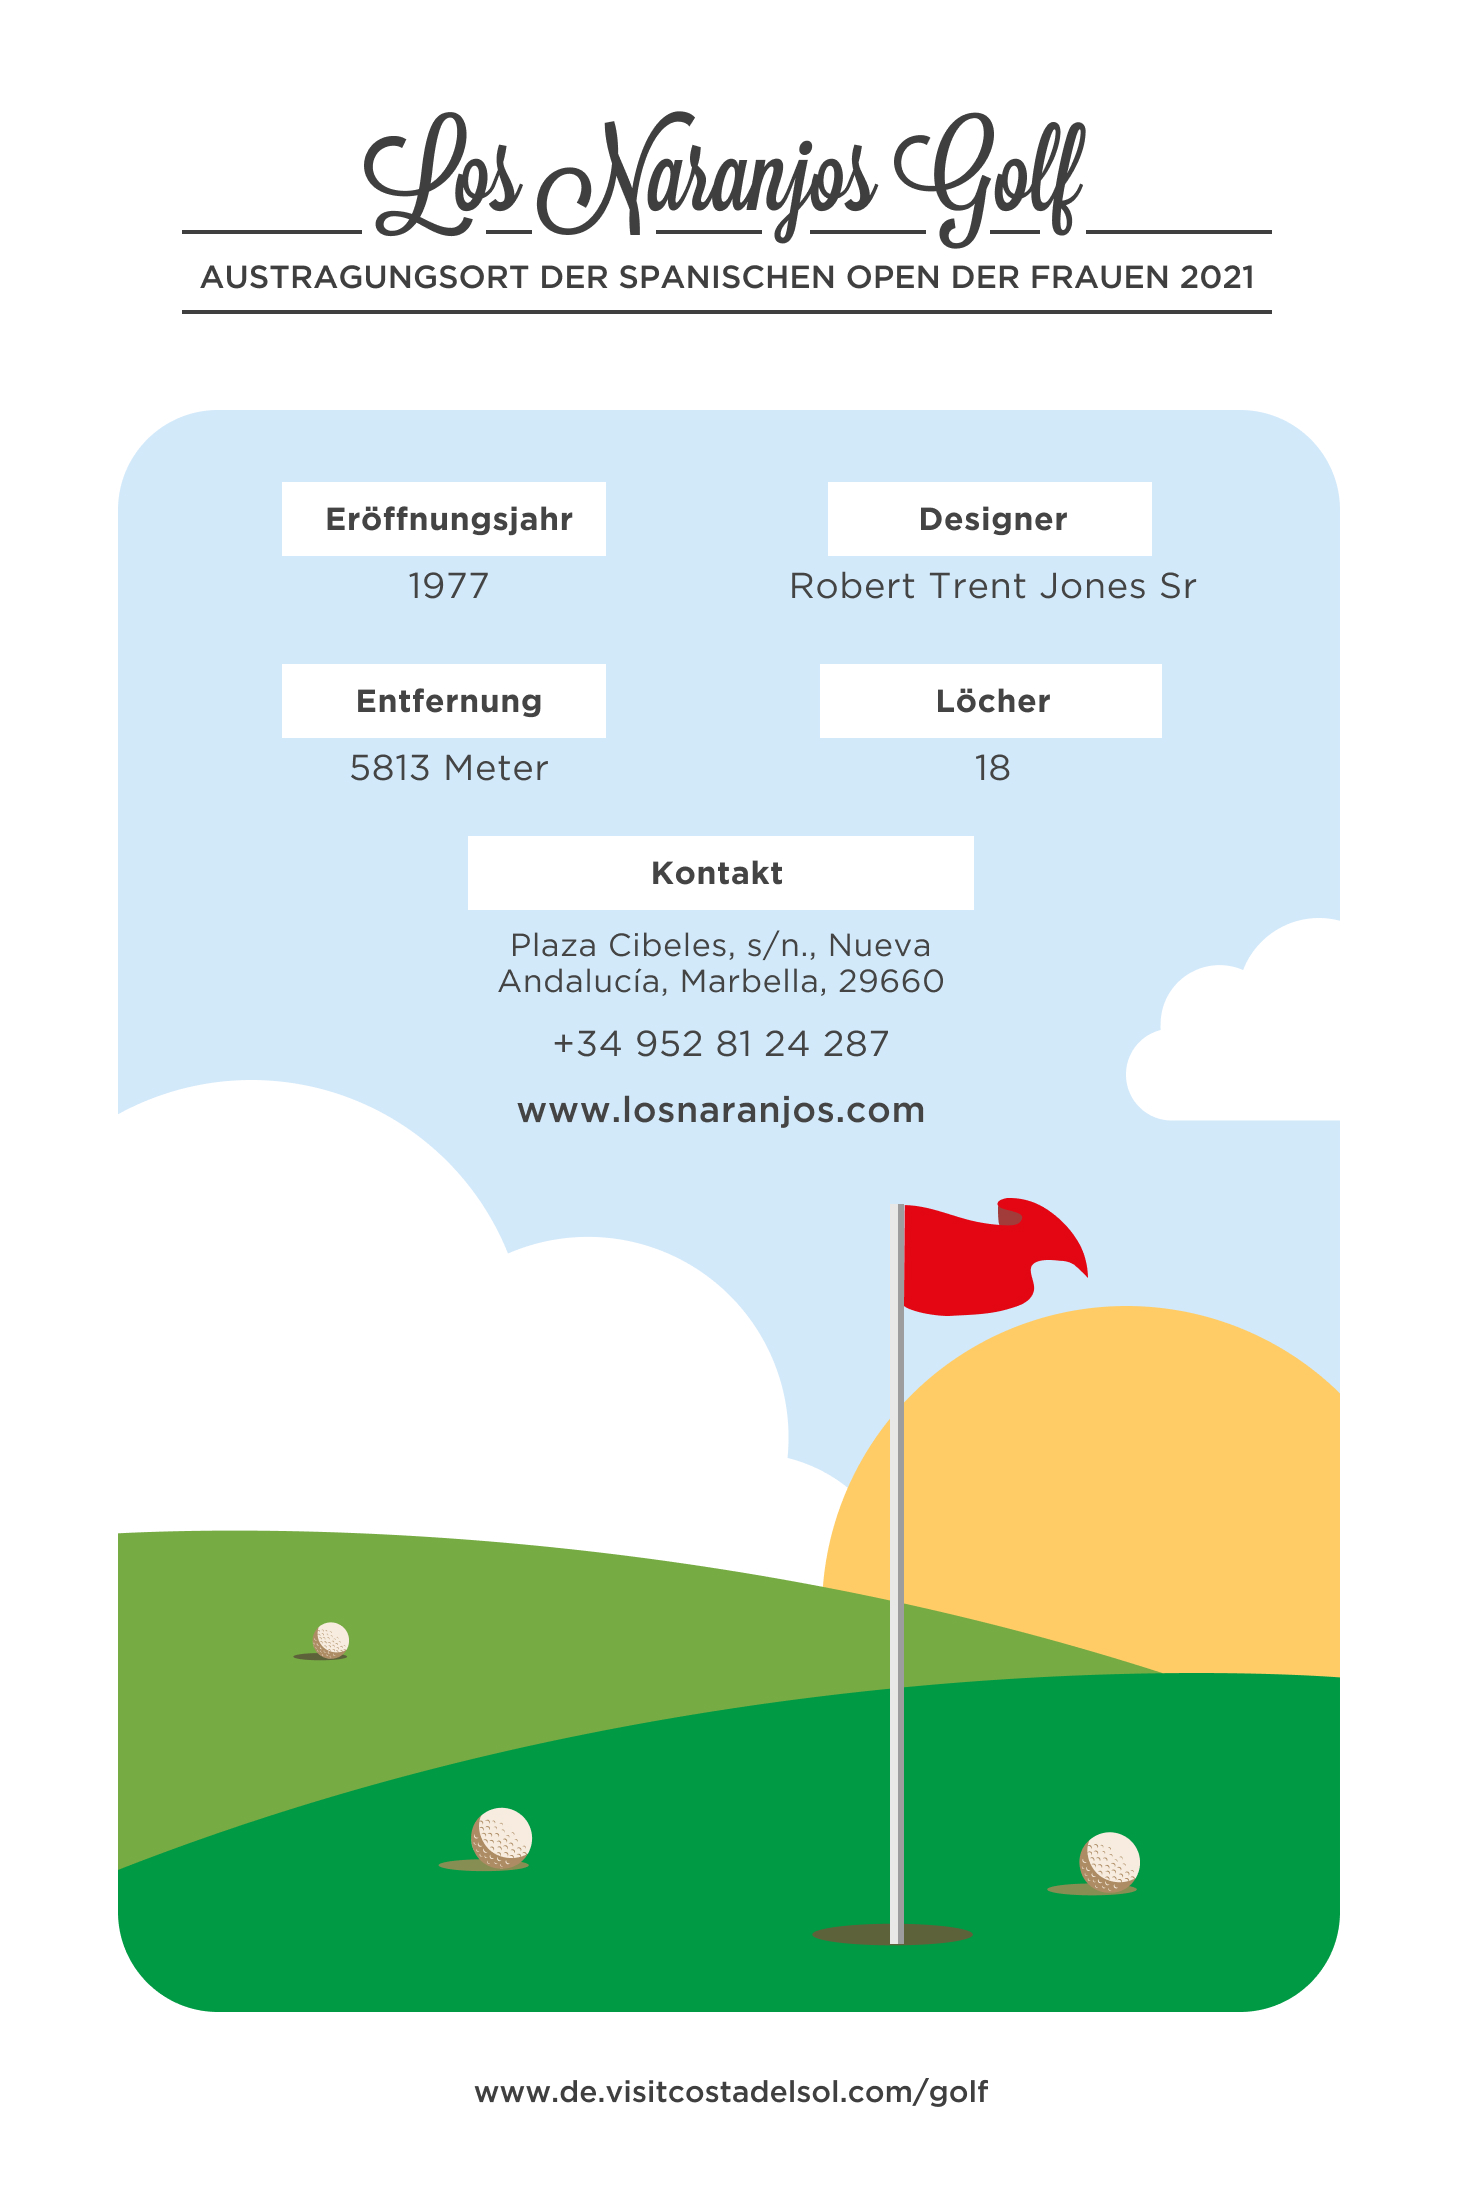 csol_#6_infografia_golf_naranjos-DE